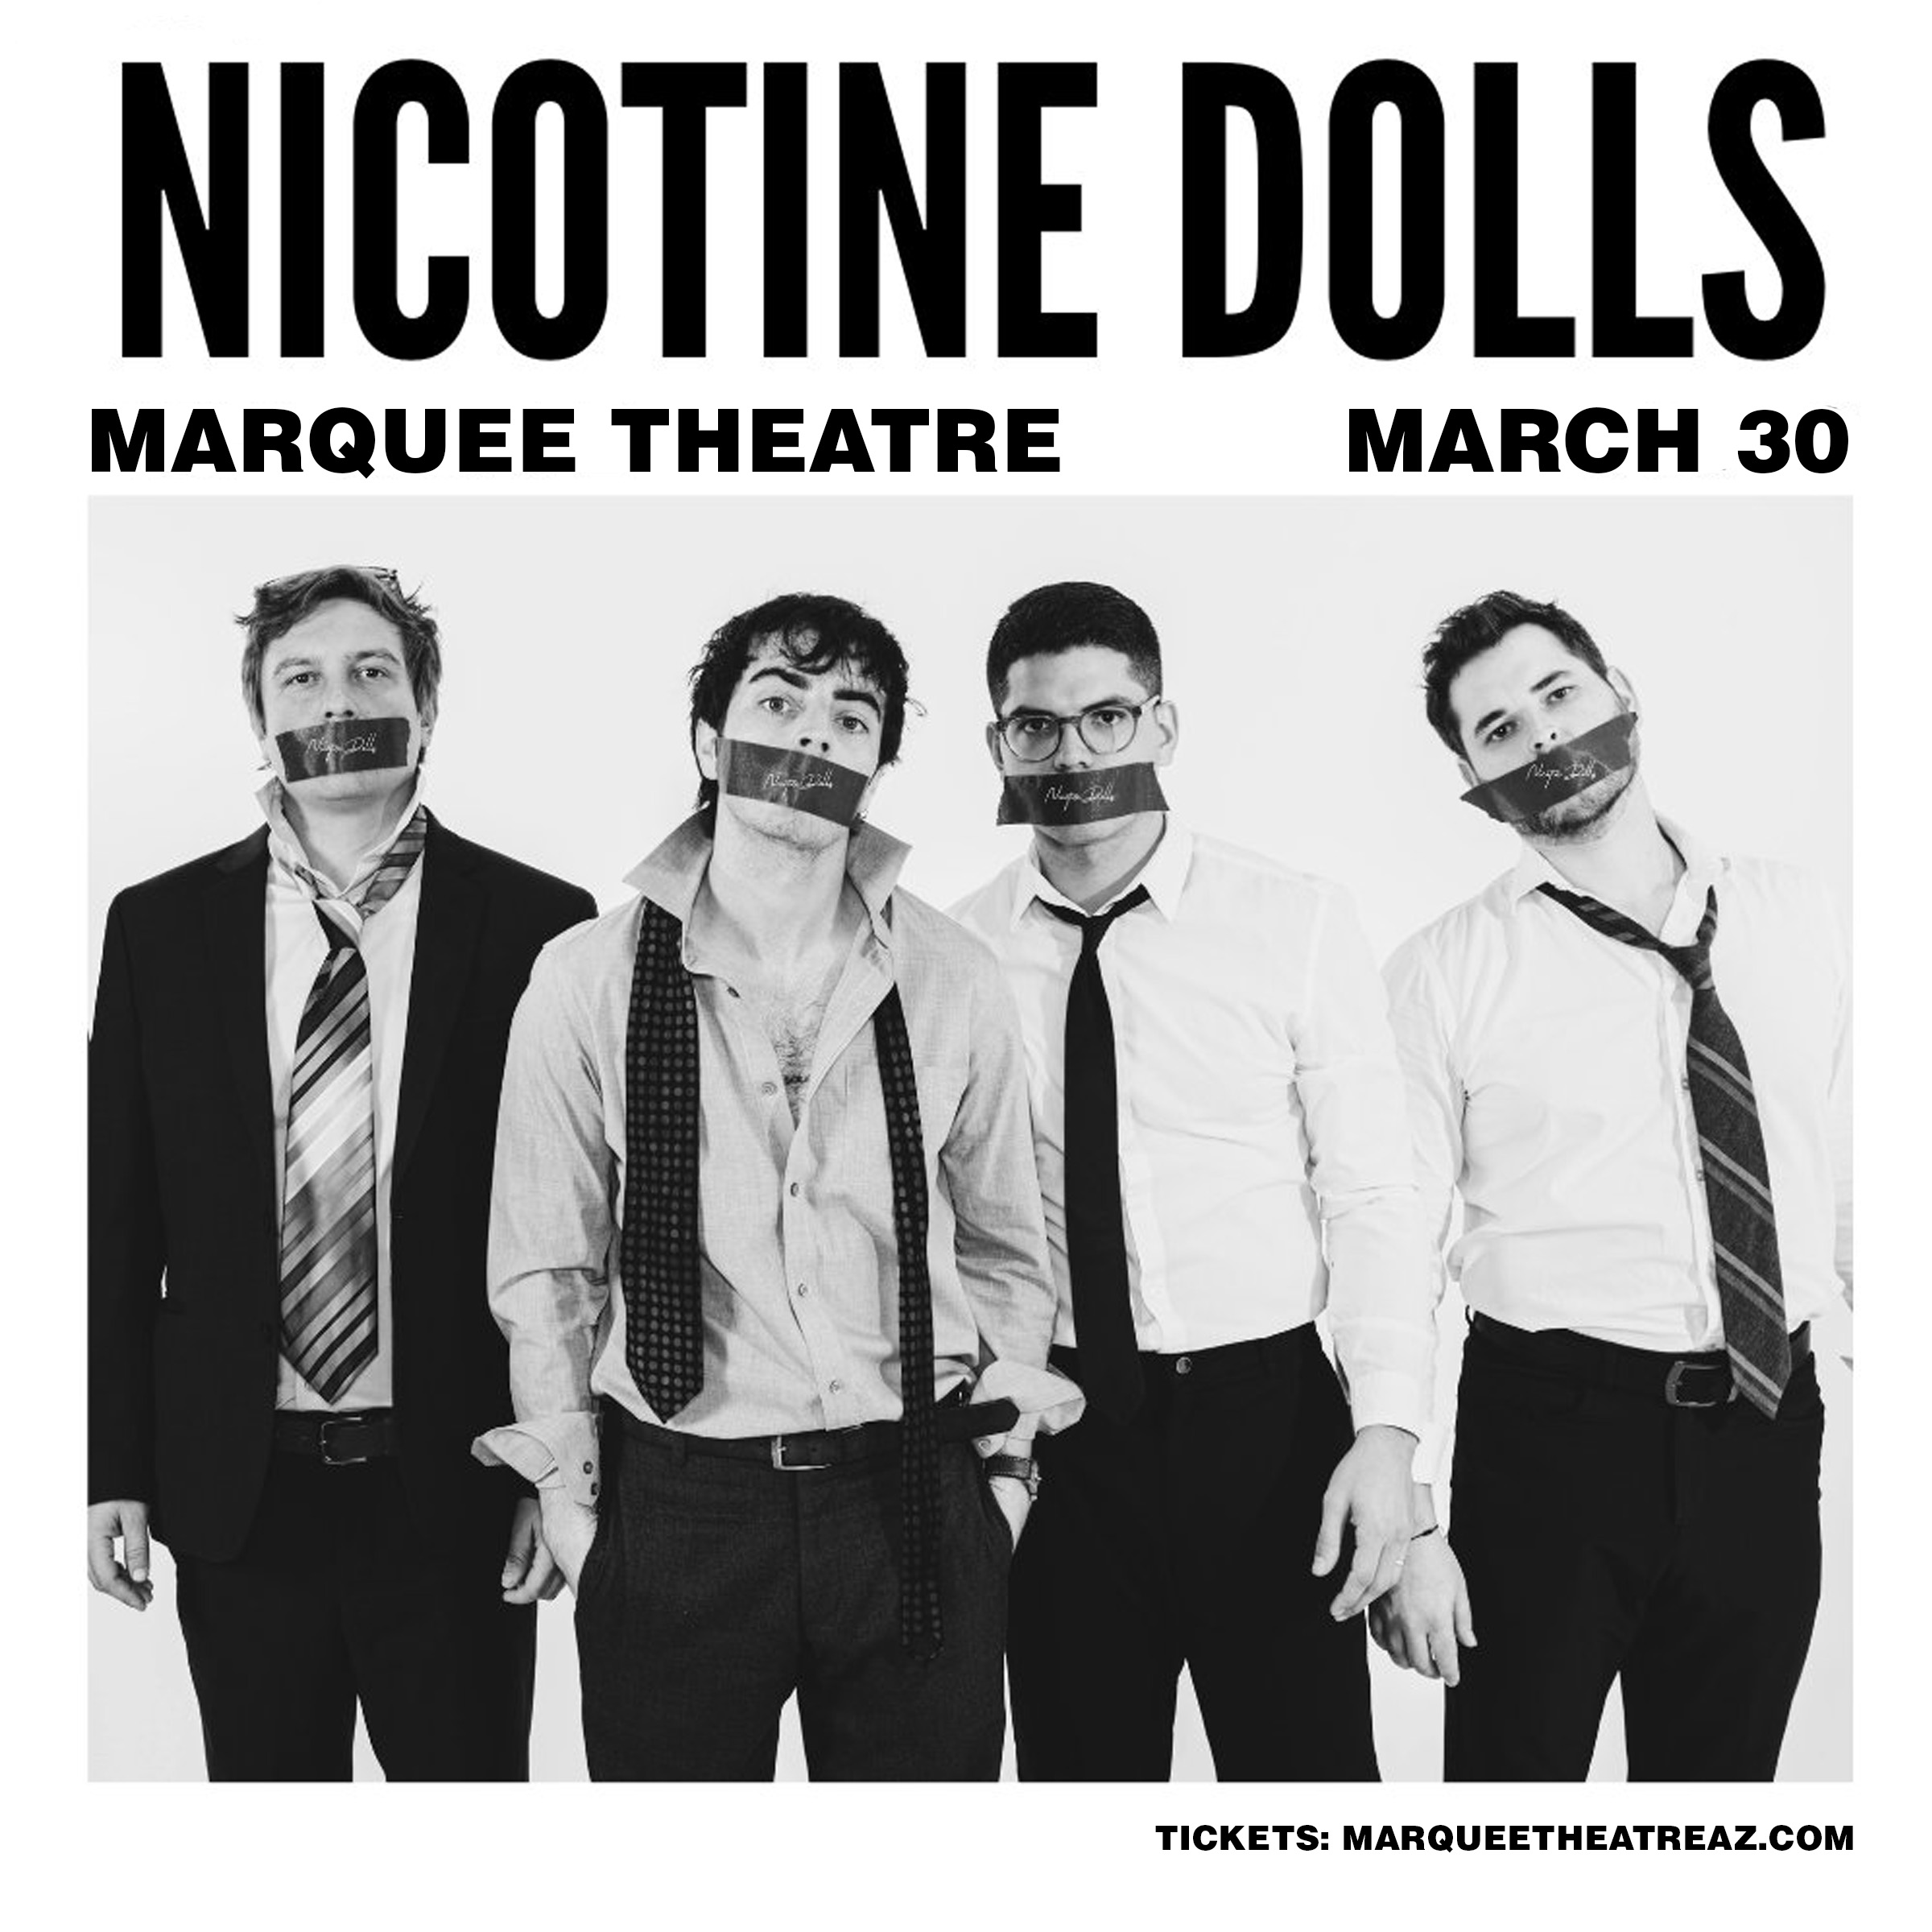 NICOTINE DOLLS Marquee Theatre